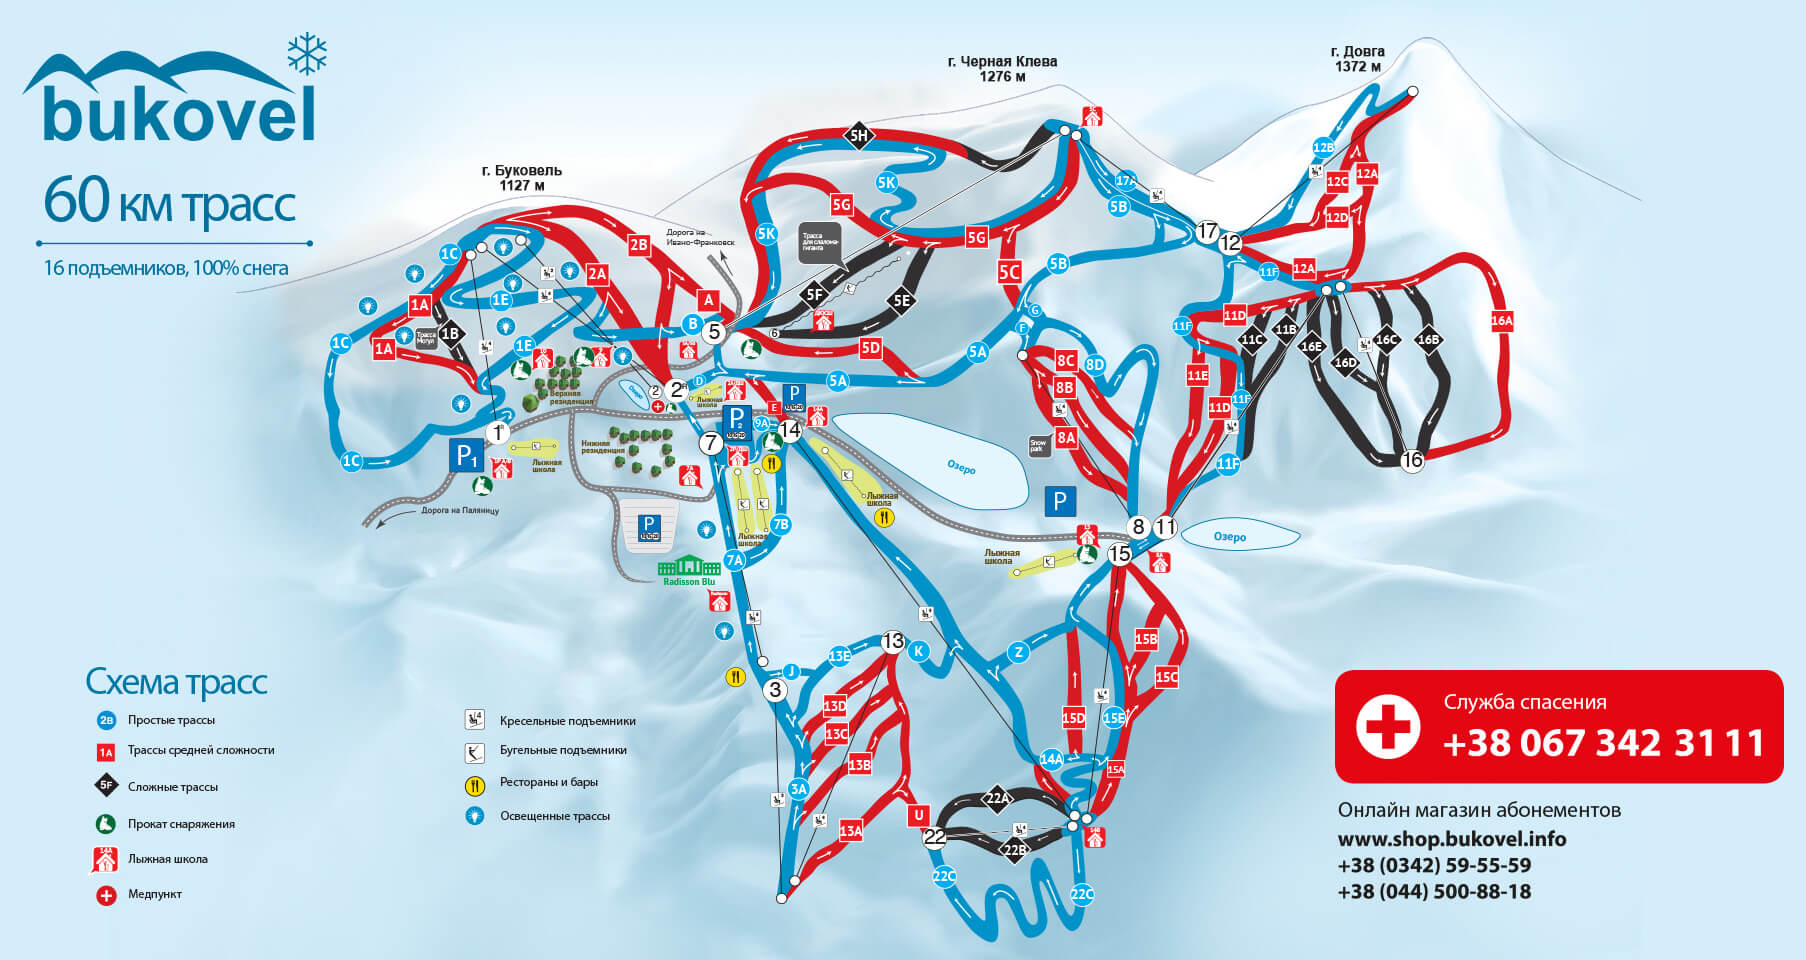 Bukovel ski map, Ukraine